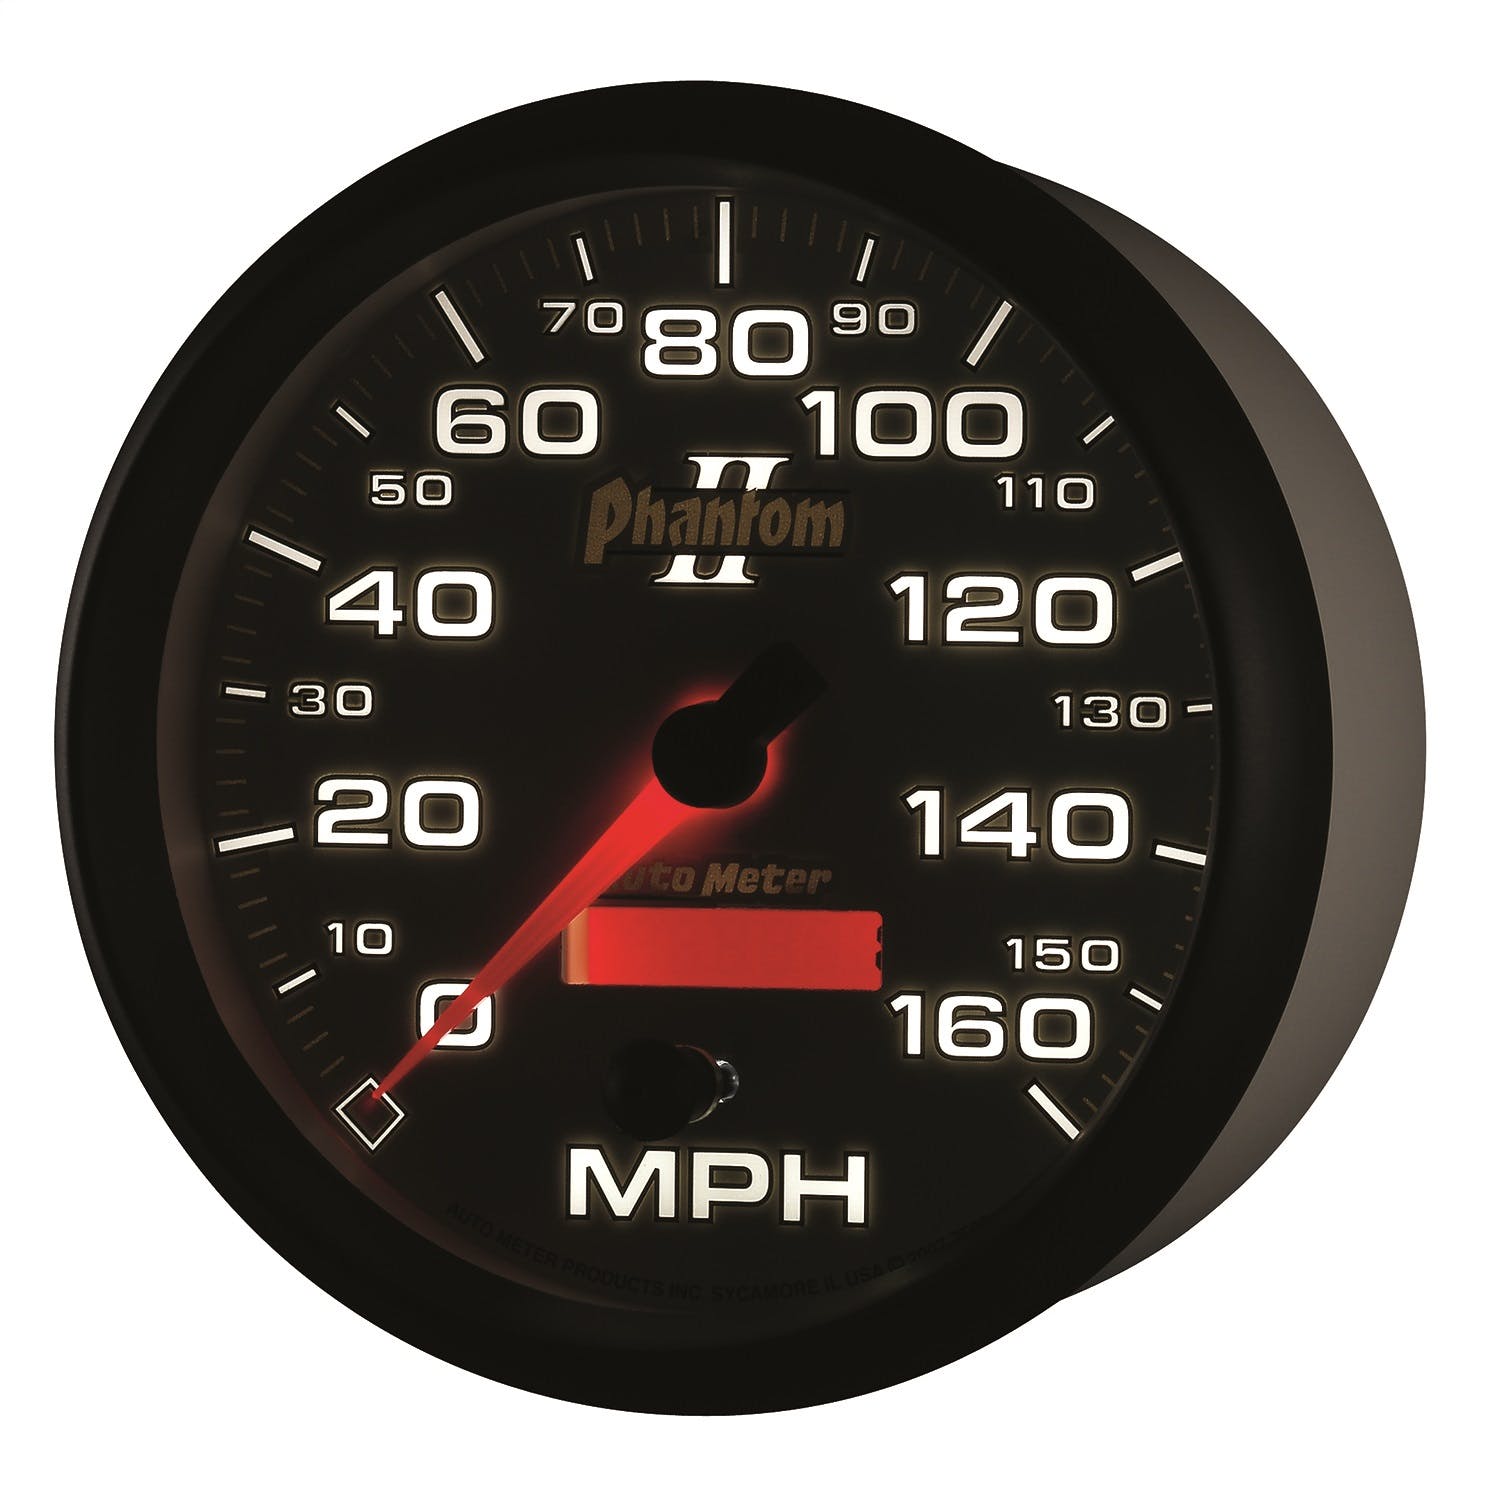 AutoMeter Products 7589 Phantom II Programmable Speedometer